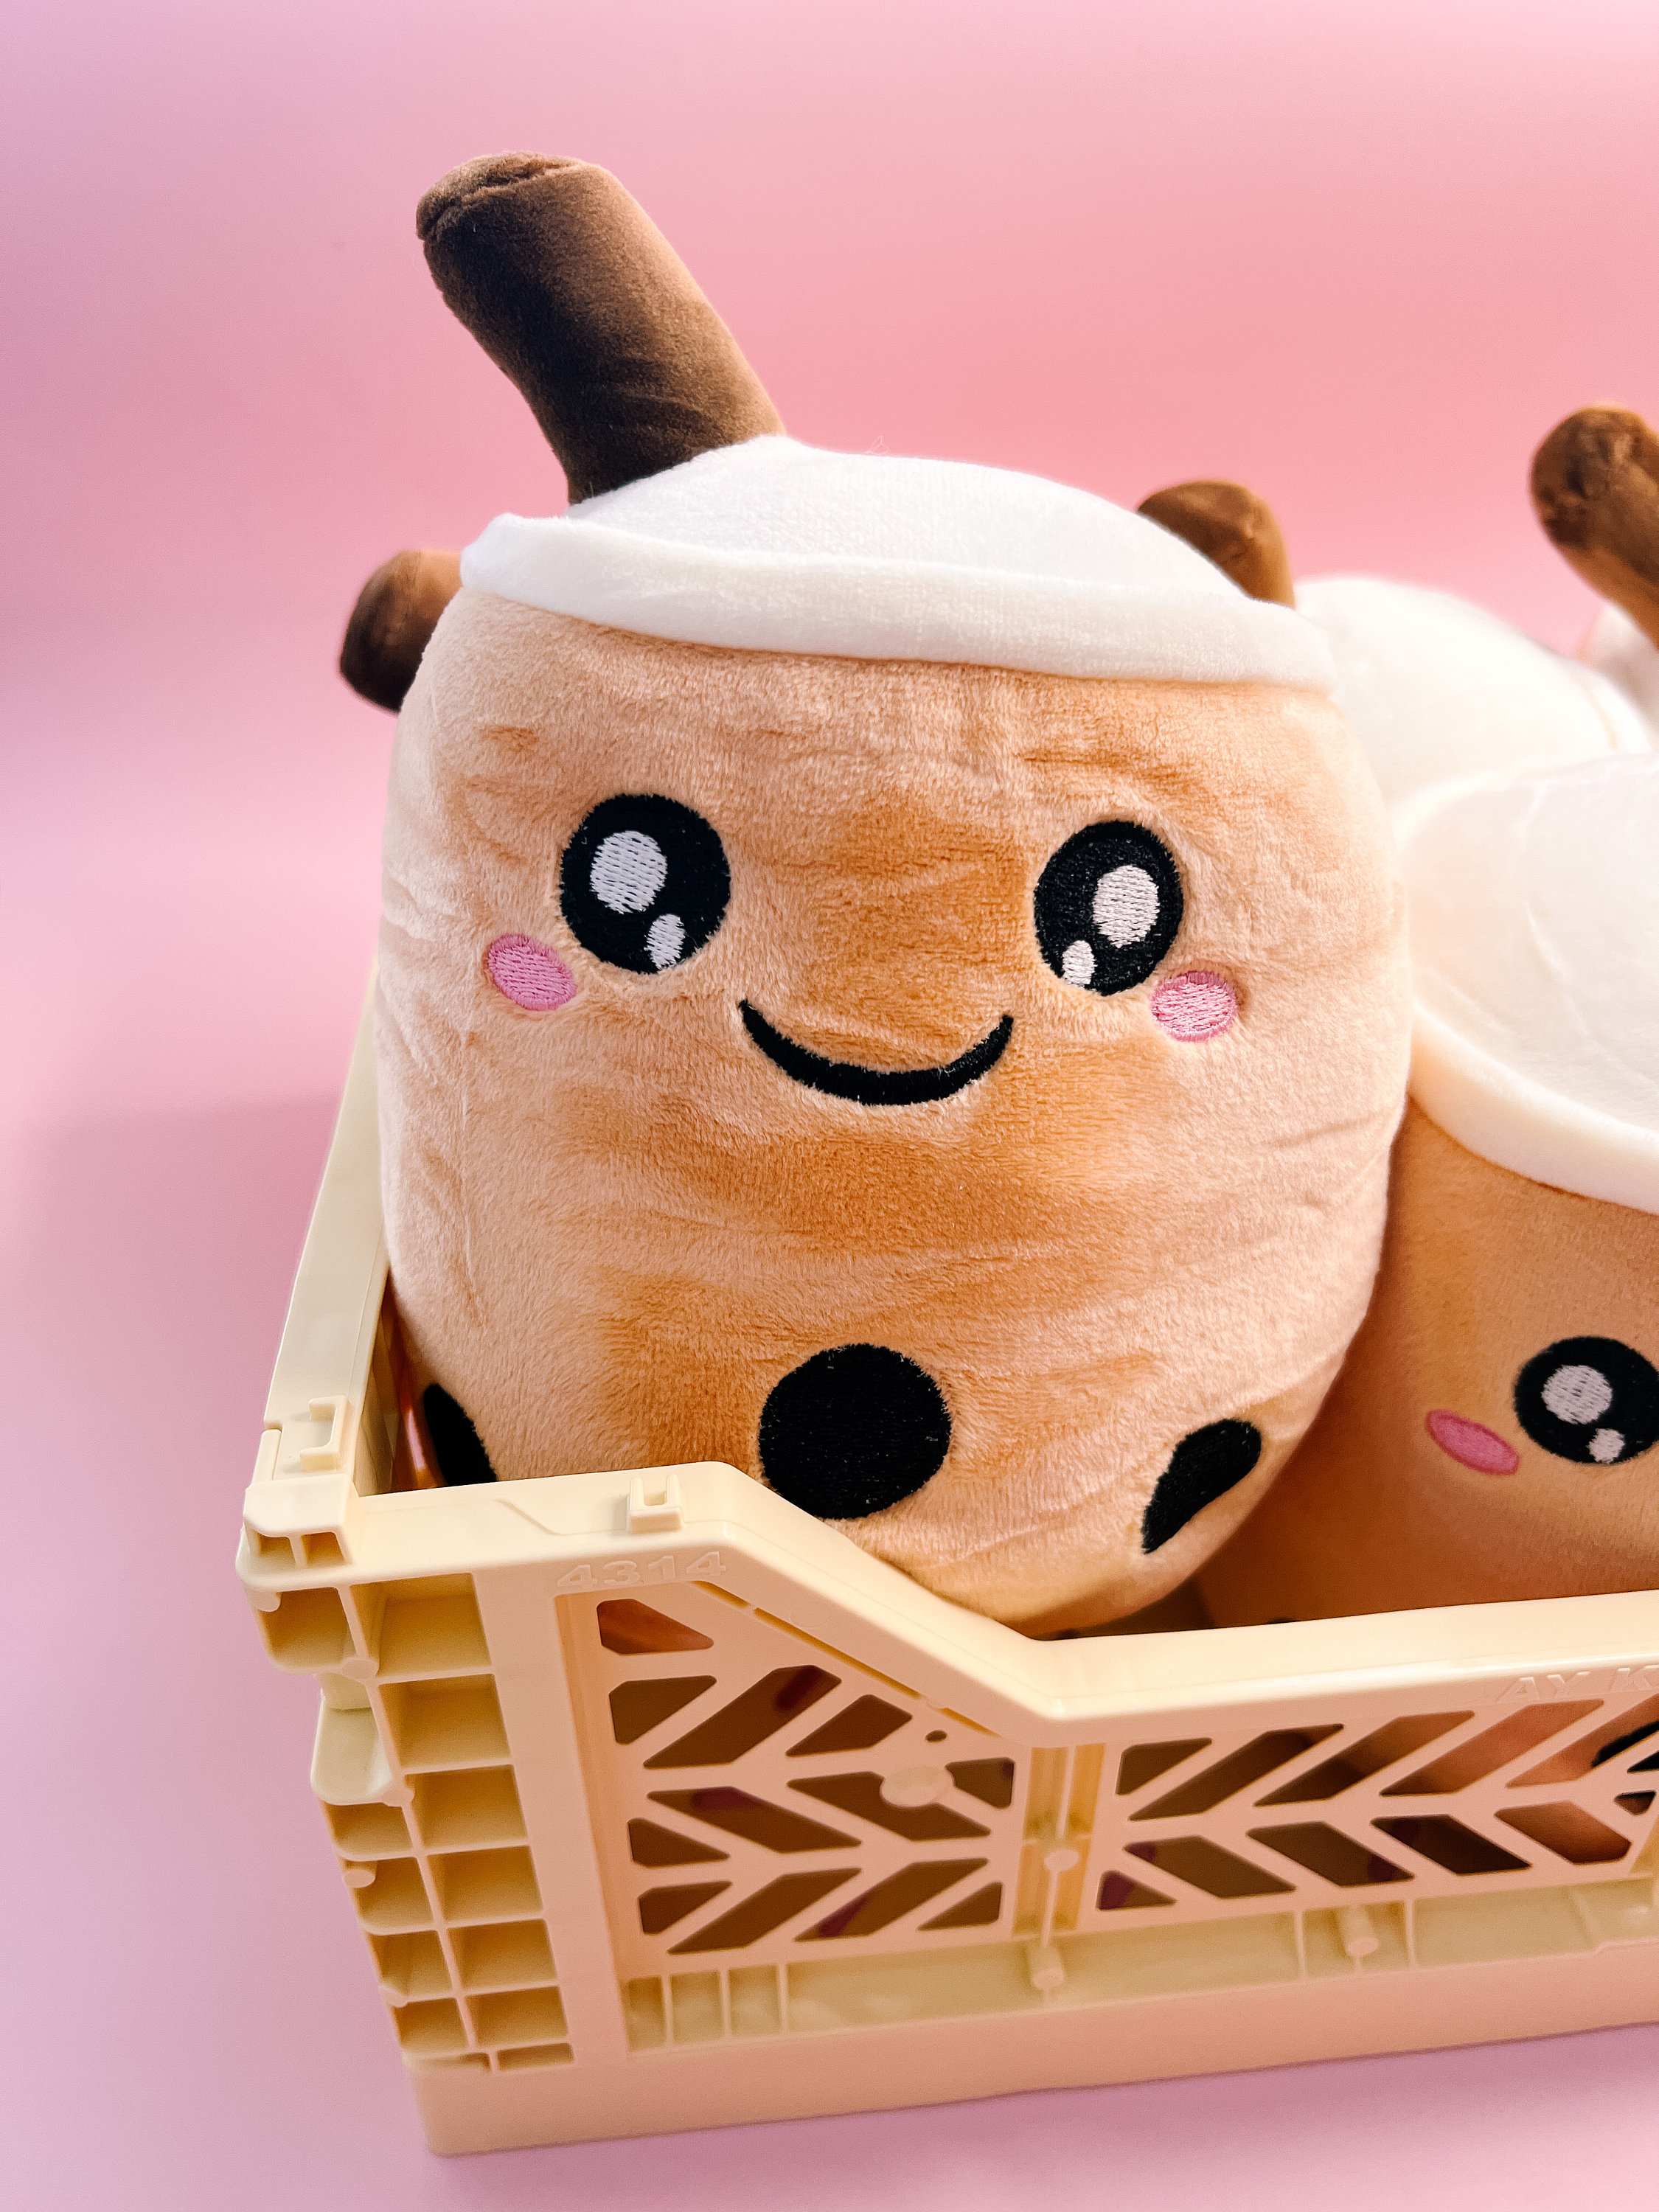 Kawaii Bubble Tea Cup Stuffed Animal Face Boba Soft Pillow Fruit Drink  Apple Pink Strawberry Milk Tea Kids Gift,25CM 